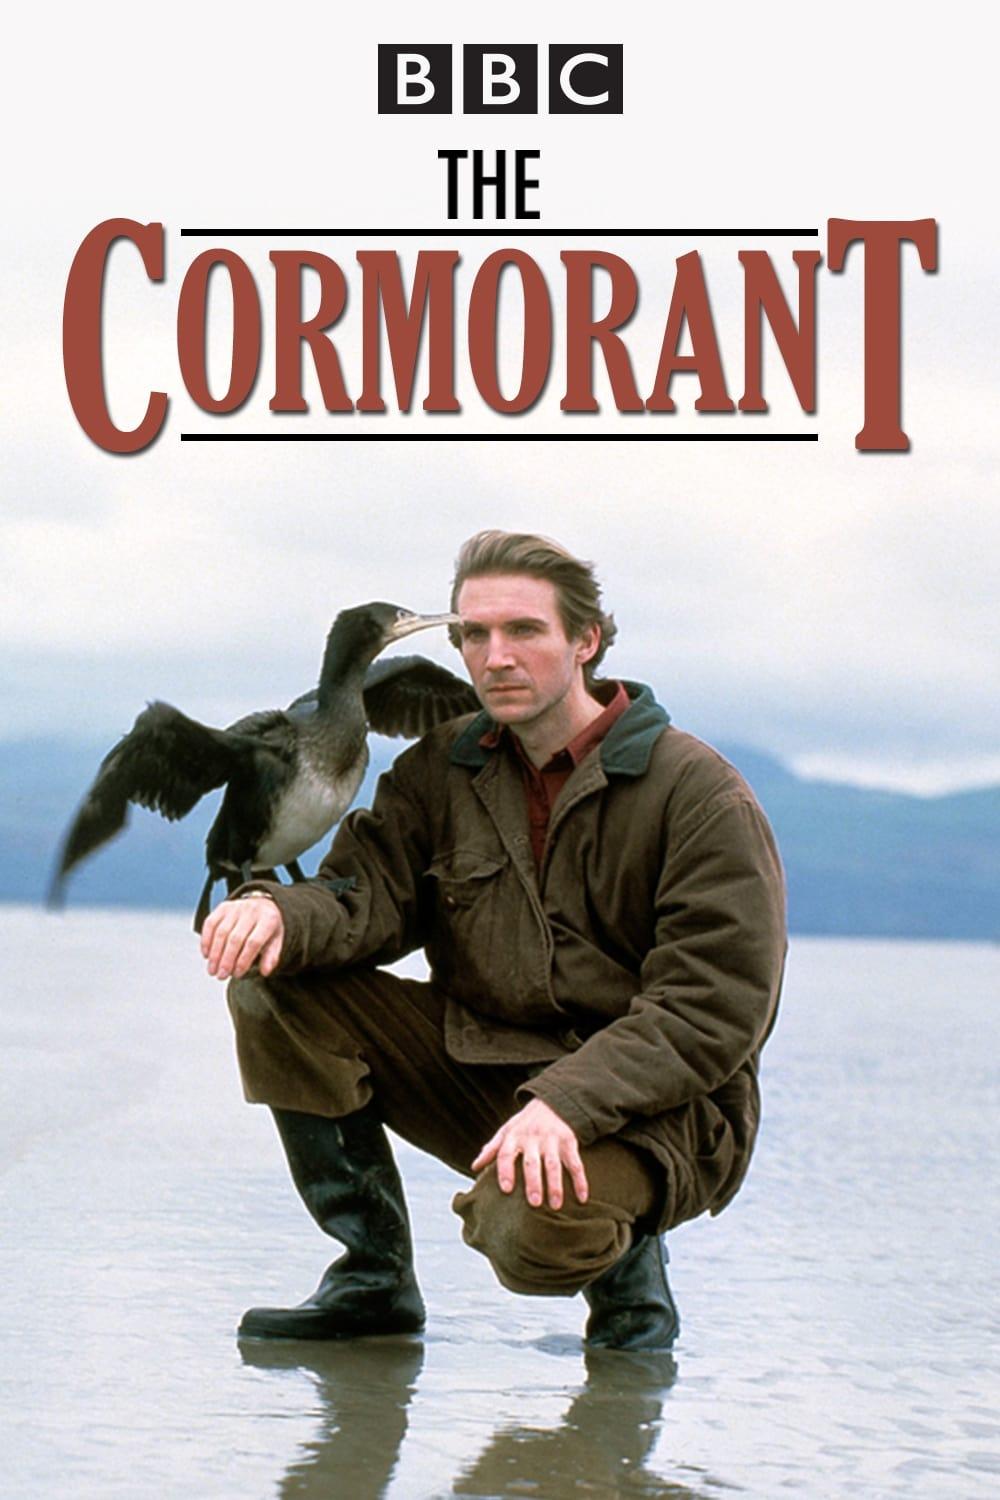 The Cormorant poster